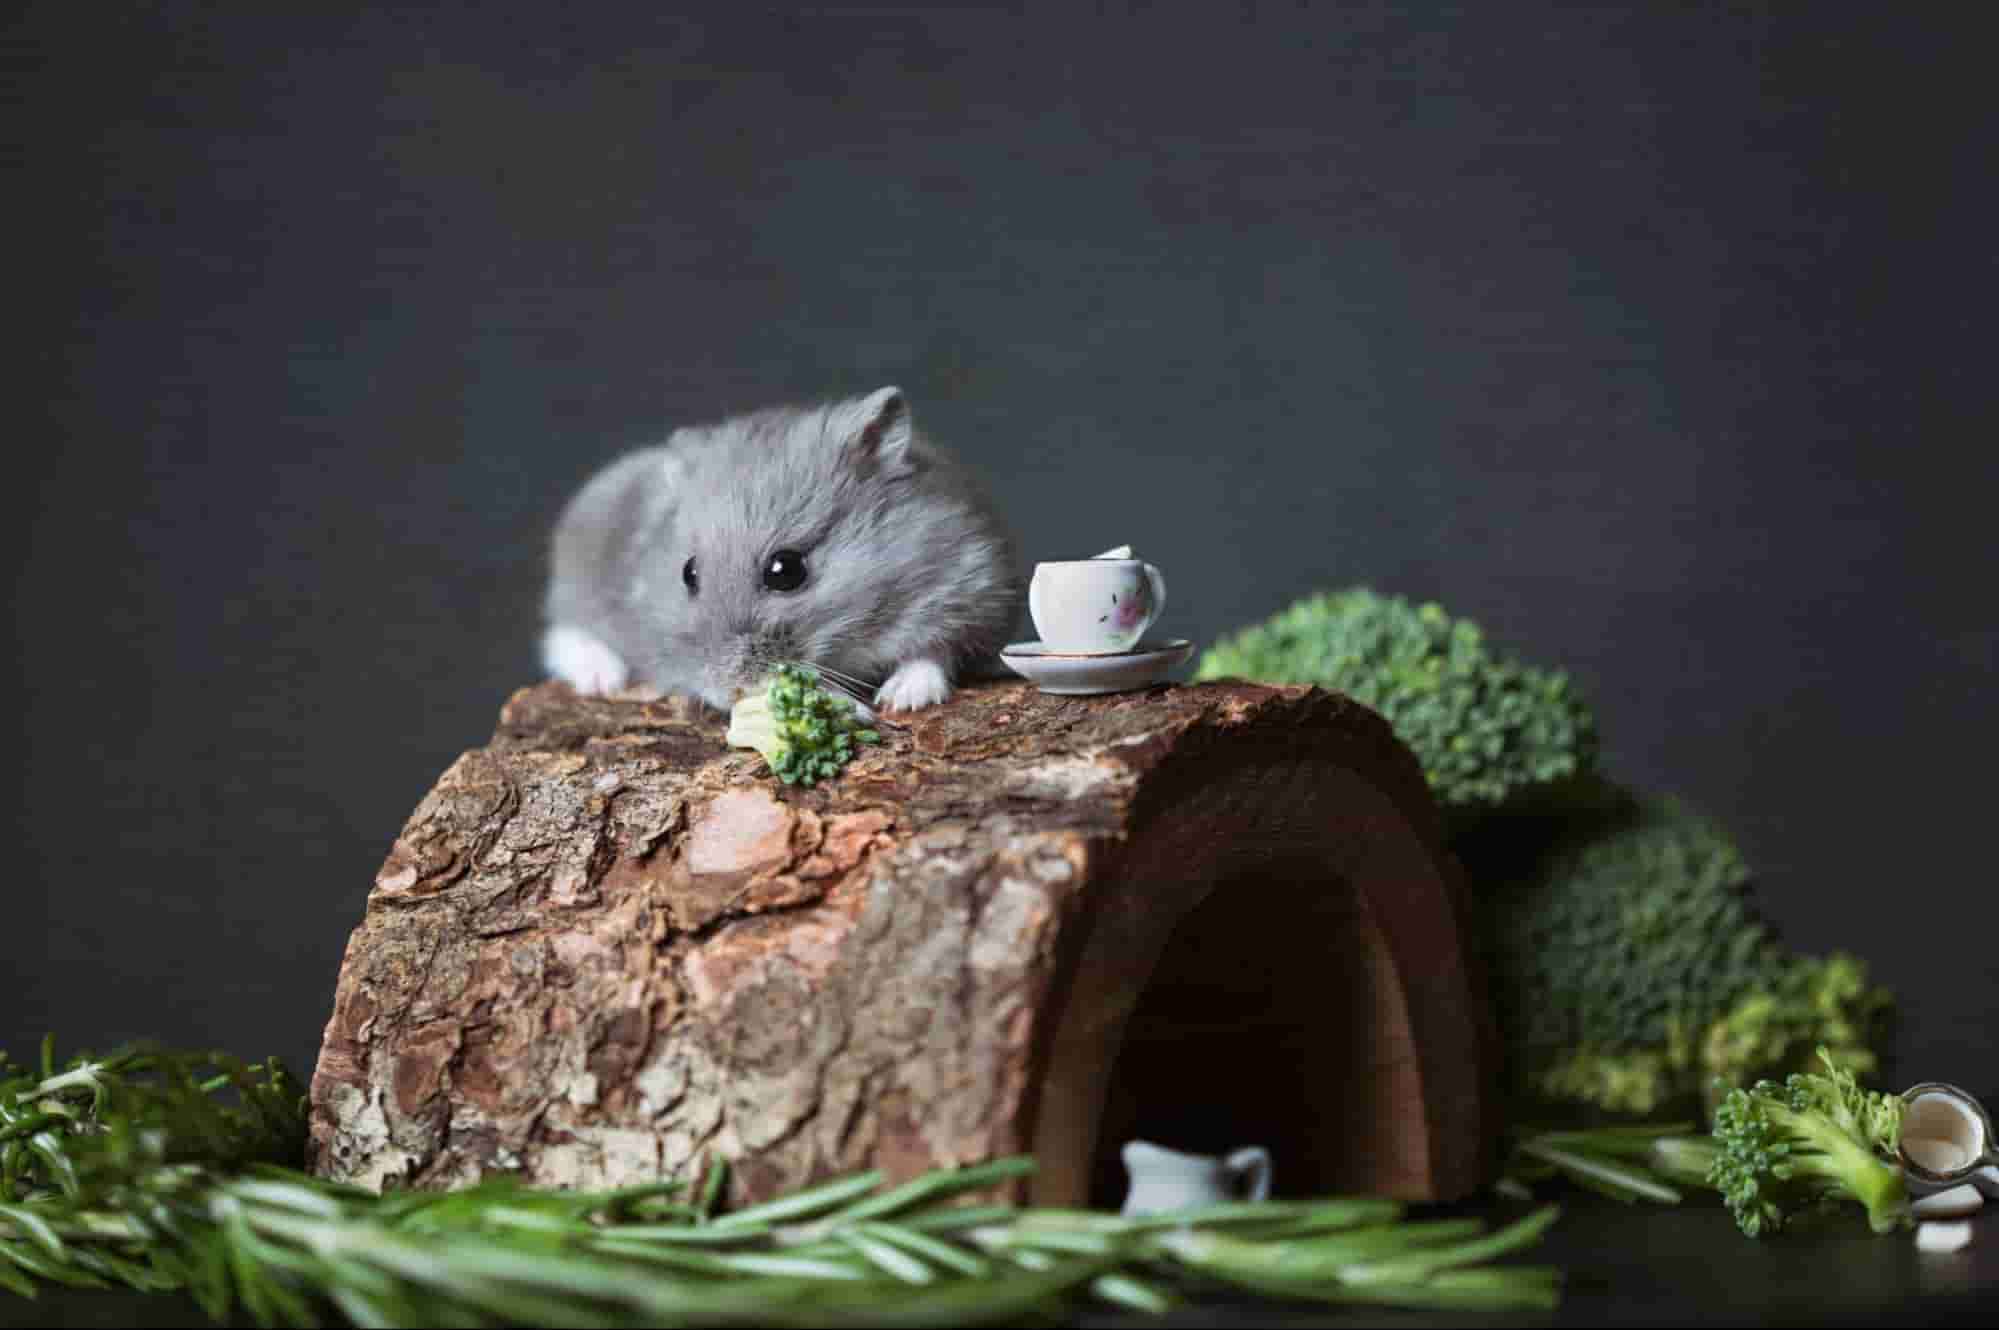 DJungarian hamsters eating broccoli